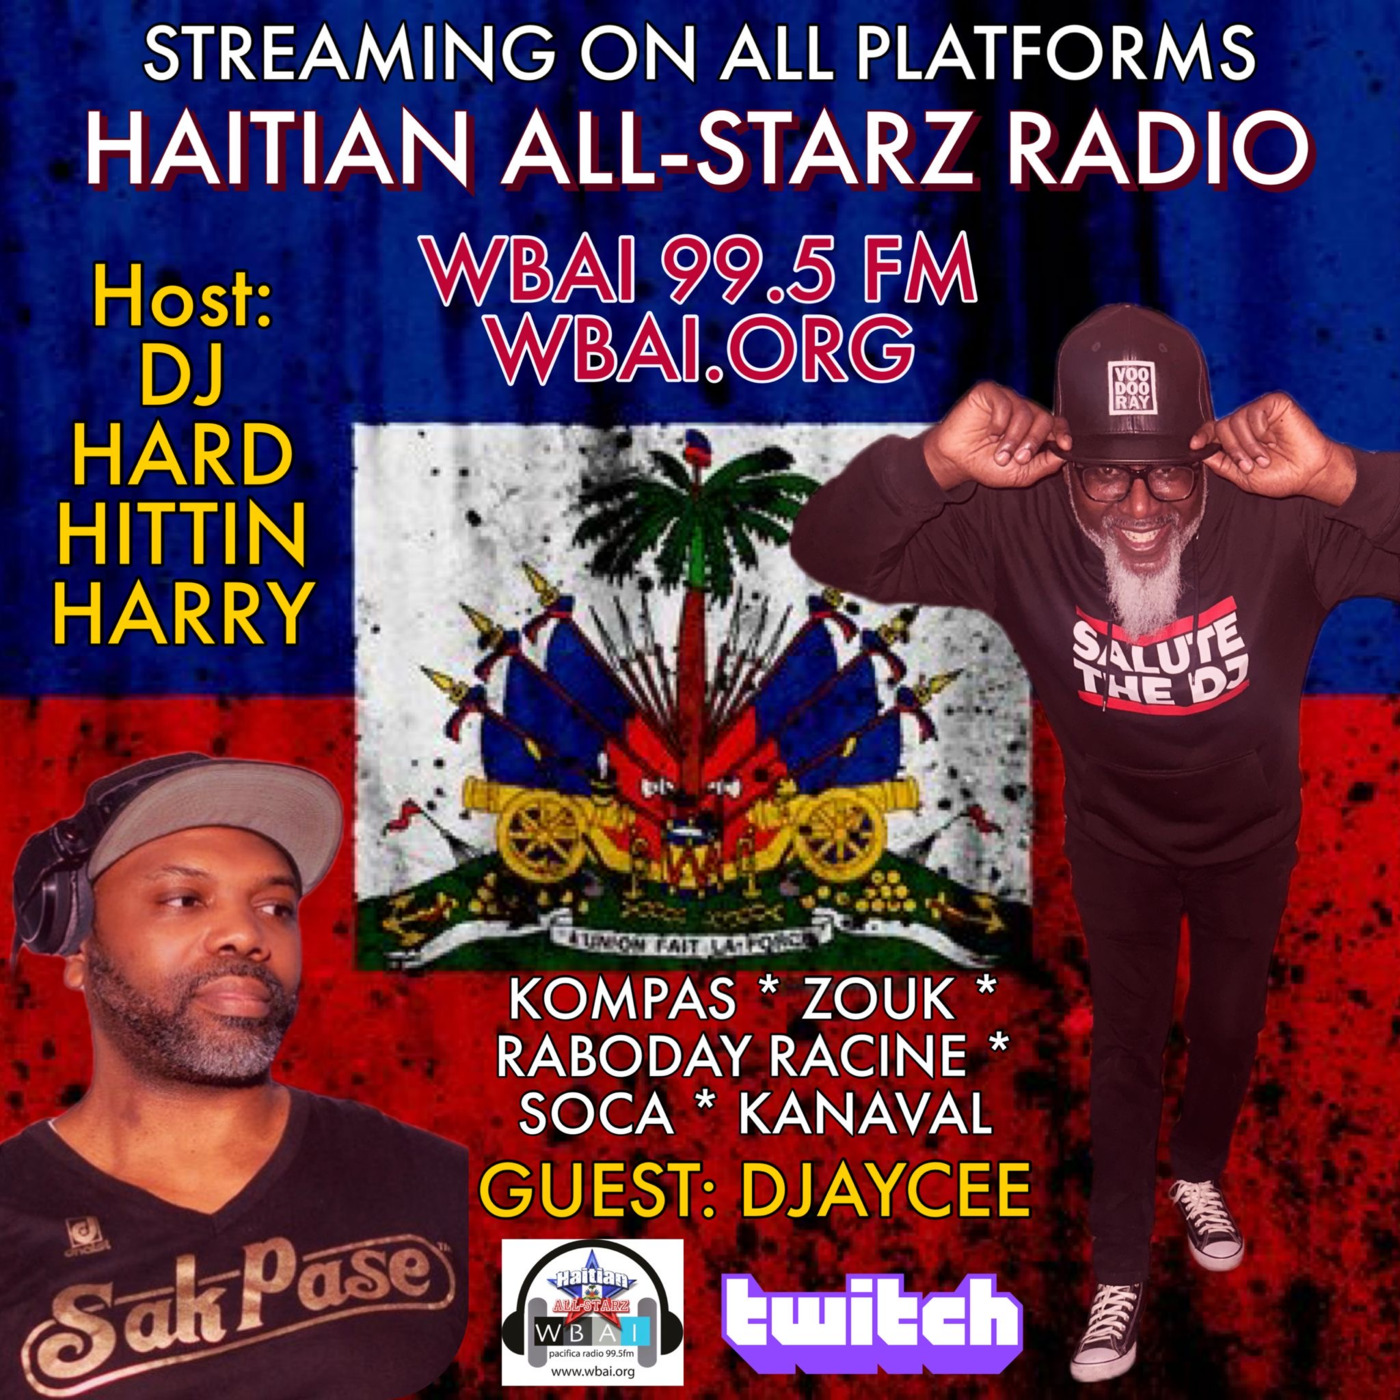 Episode 8: HAITIAN ALL-STARZ RADIO - WBAI 99.5 FM - EPISODE #230 - HARD HITTIN HARRY & DJayCee